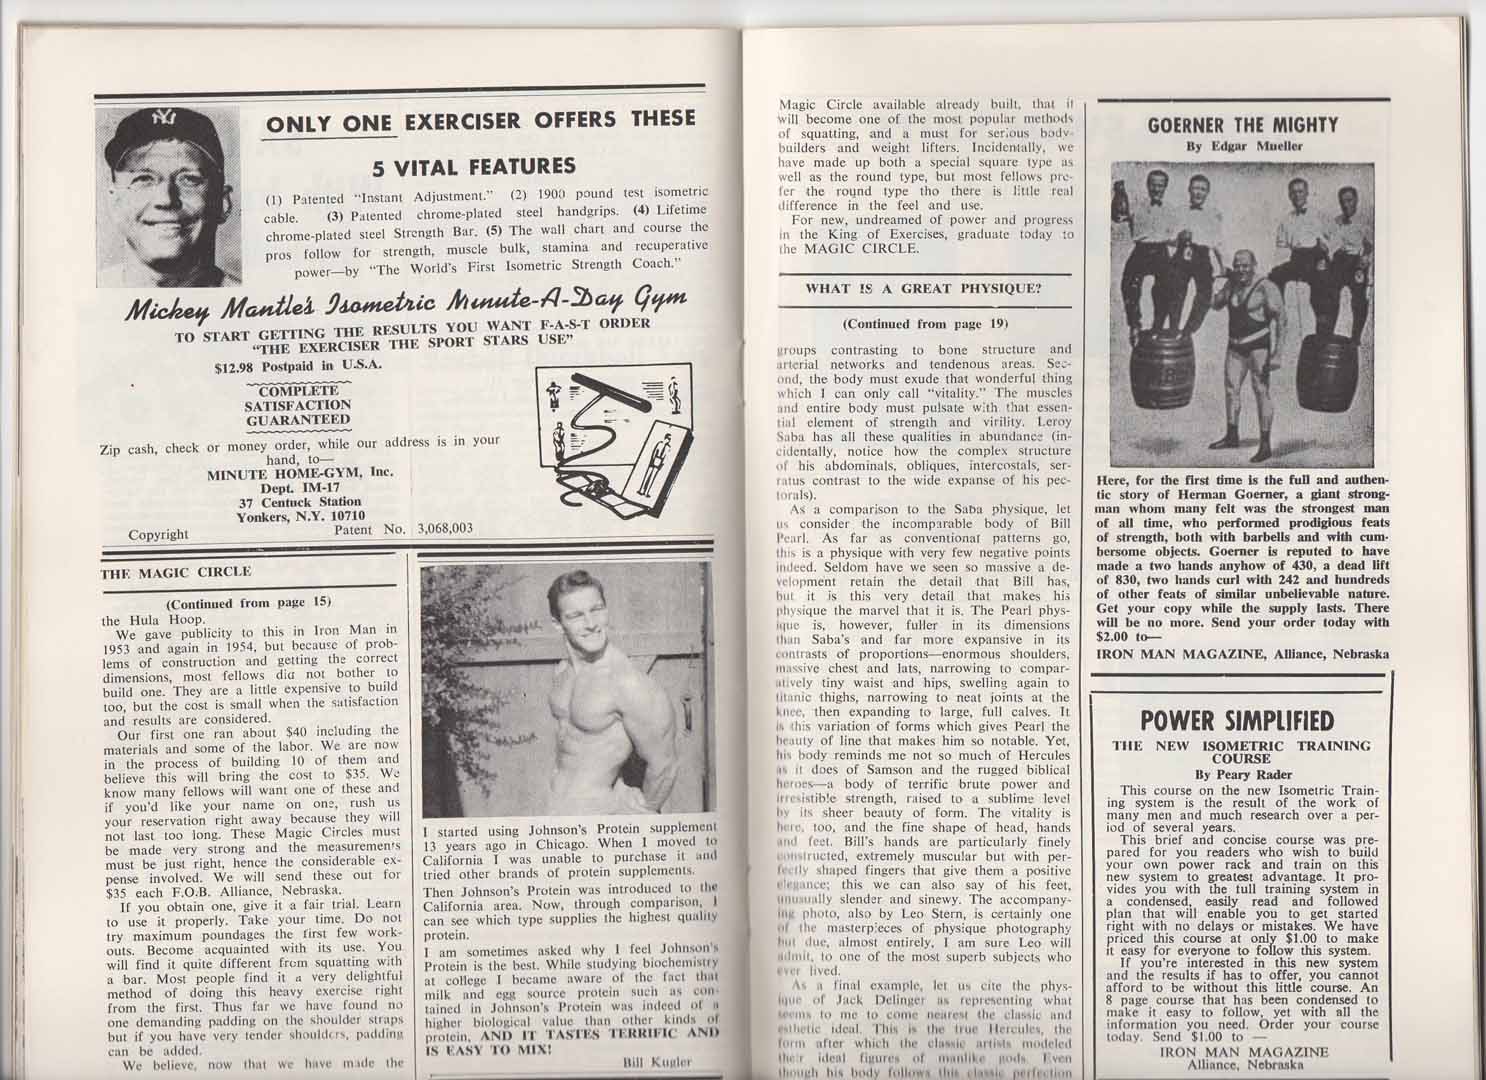 1964 iron man magazine may